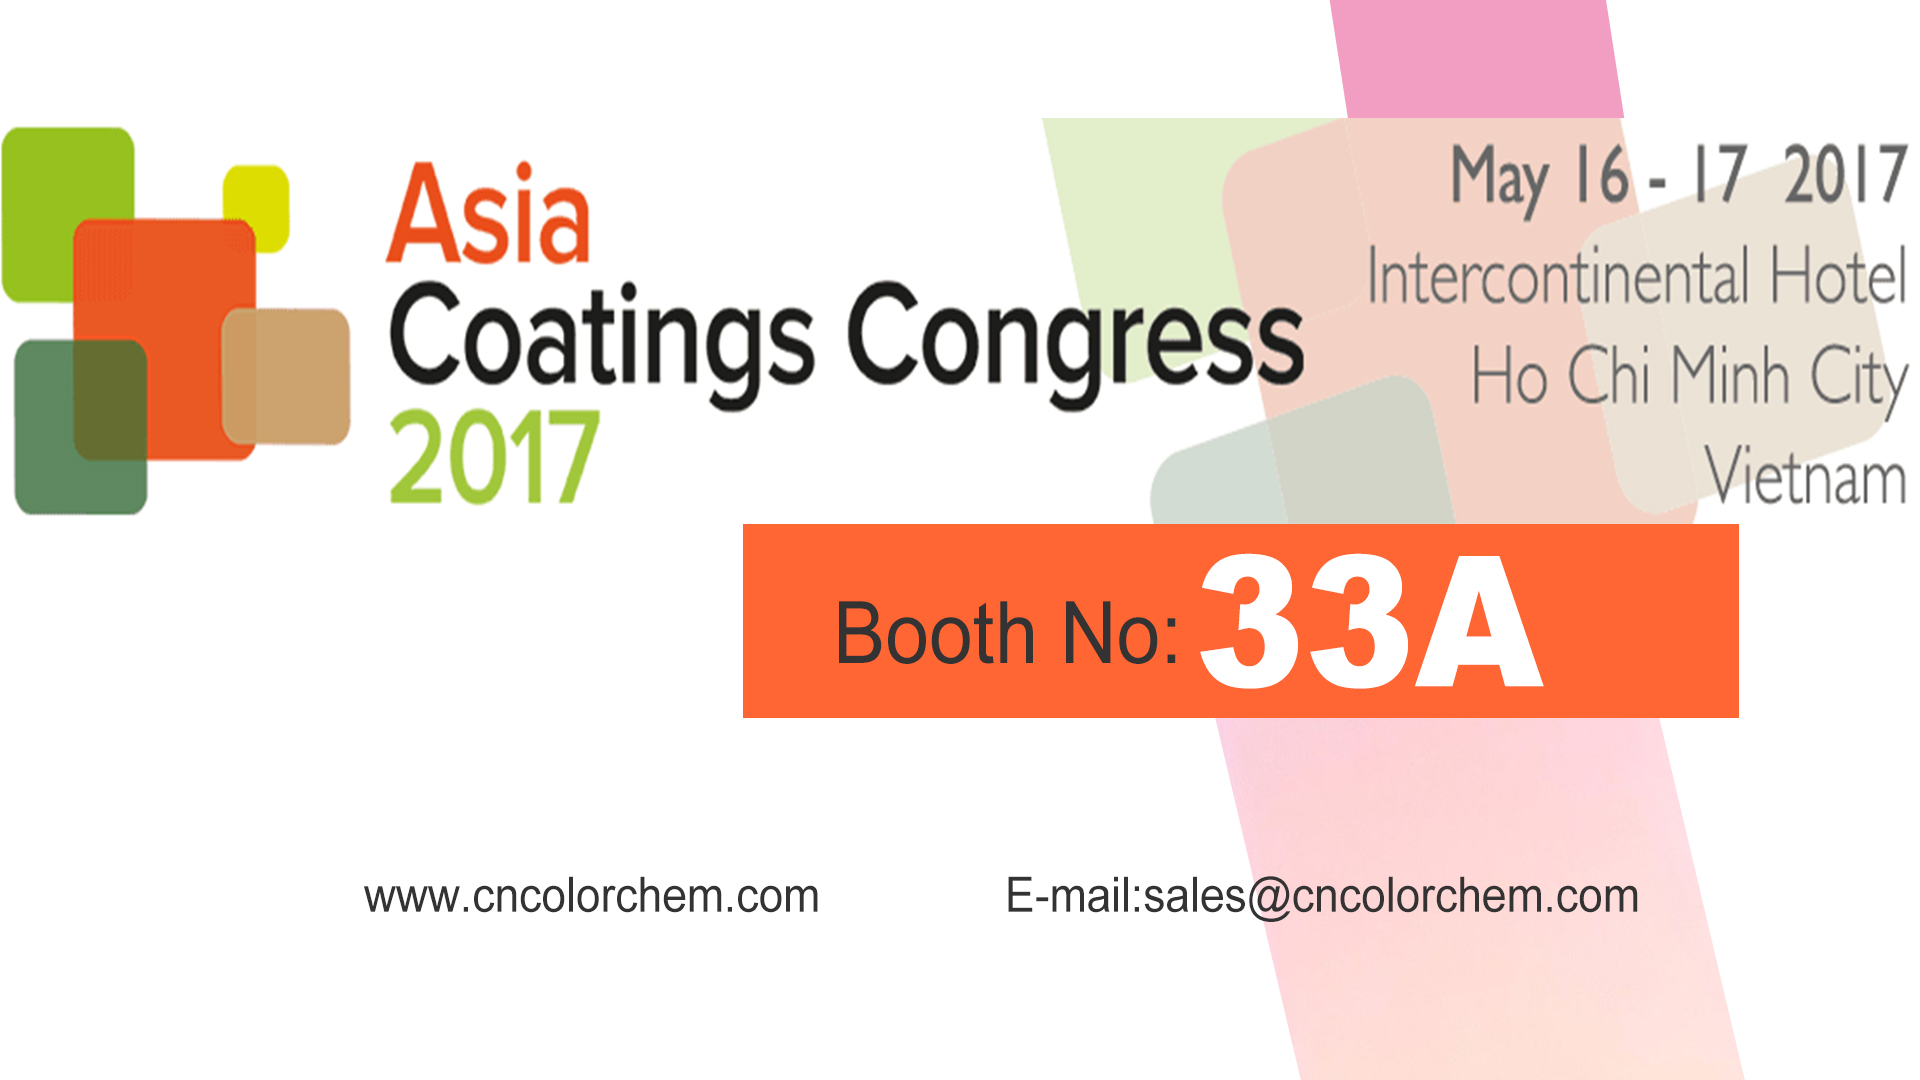 Congresso Asia Coatings 2017